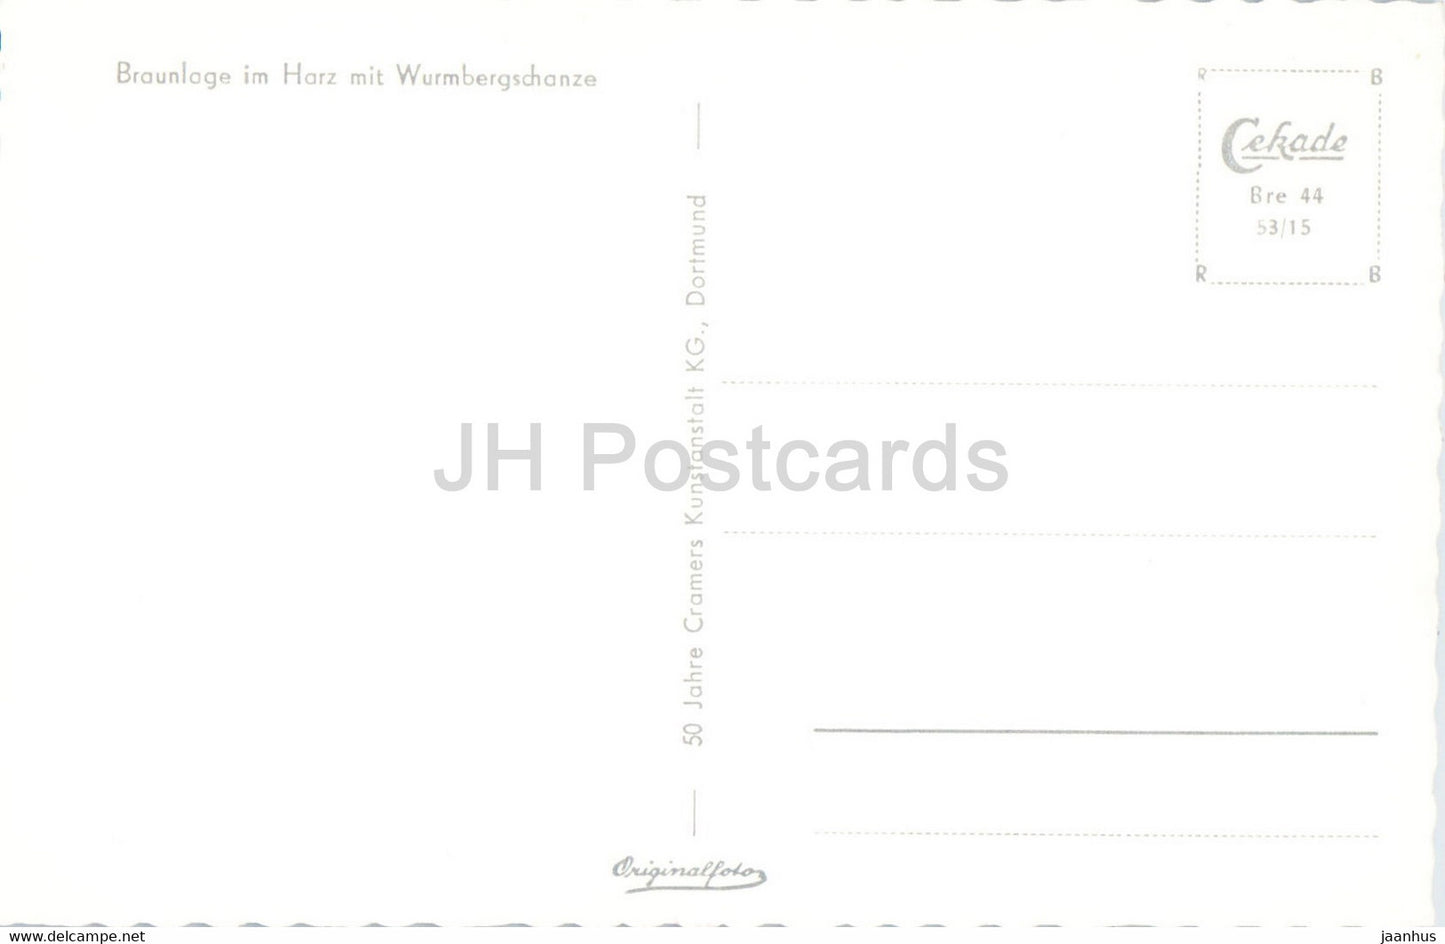 Braunlage im Harz mit Wurmbergschanze - old postcard - Germany - unused